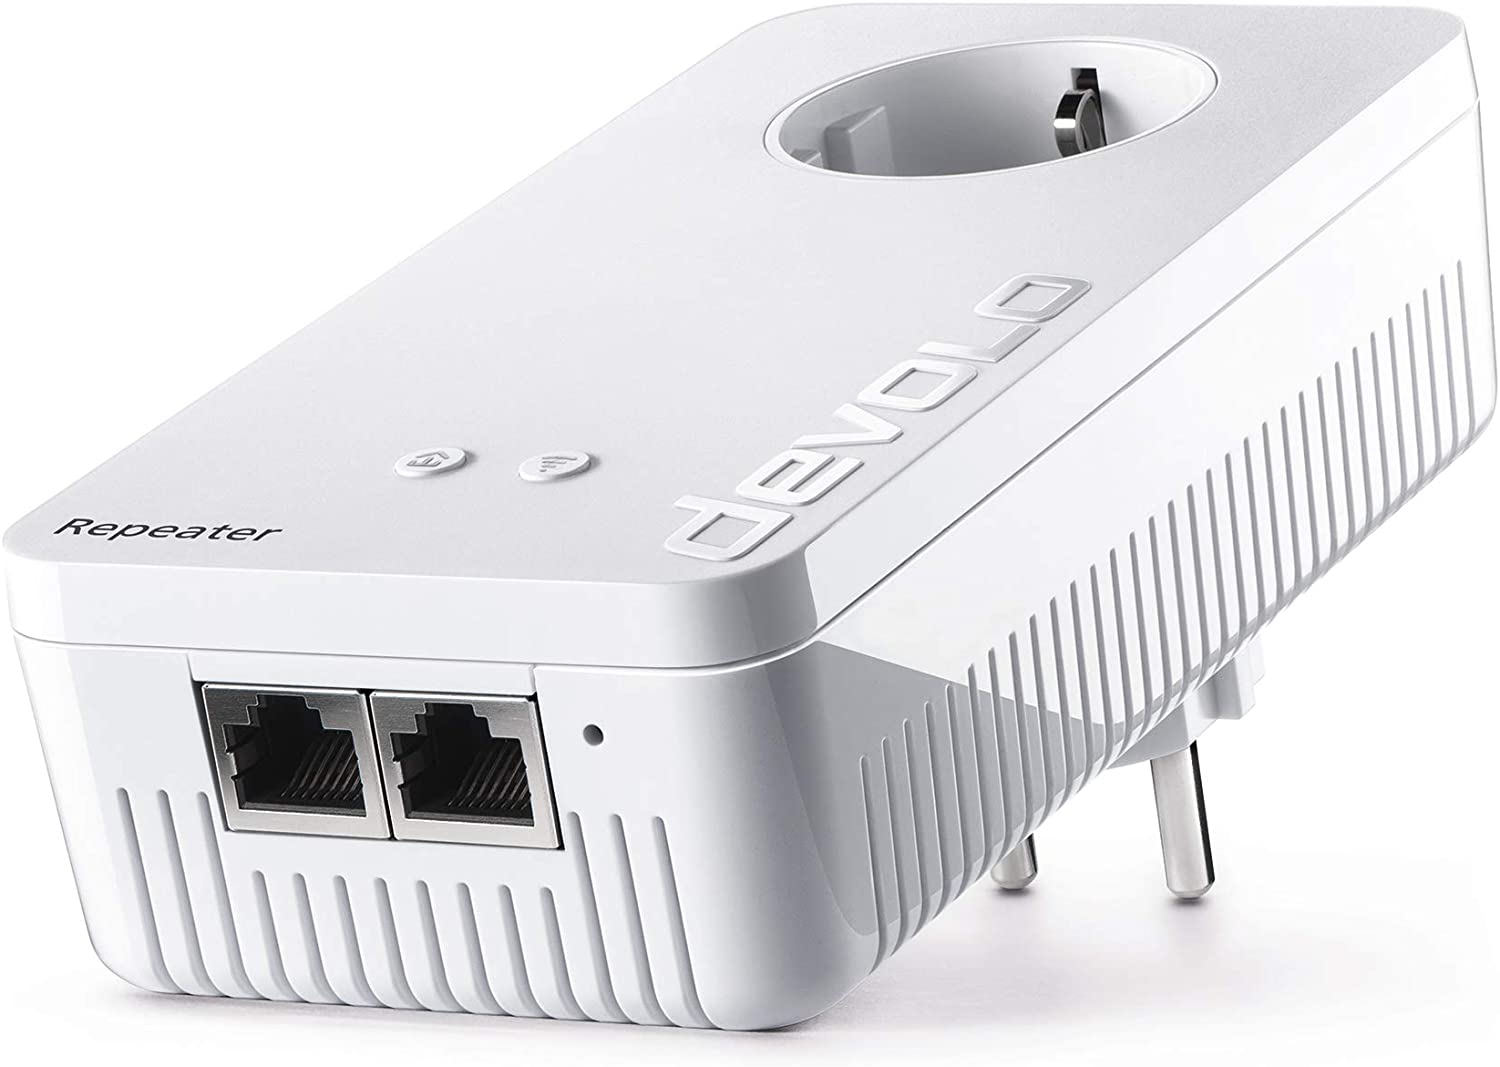 Devolo WLAN Repeater+ ac: WiFi-Verstärker mit Steckdose, schnelleres Internet dank Dual-WiFi, kompatibel mit allen Routern, (1200 Mbit/s, 2x LAN-Ports, AP-Modus, Access Point)